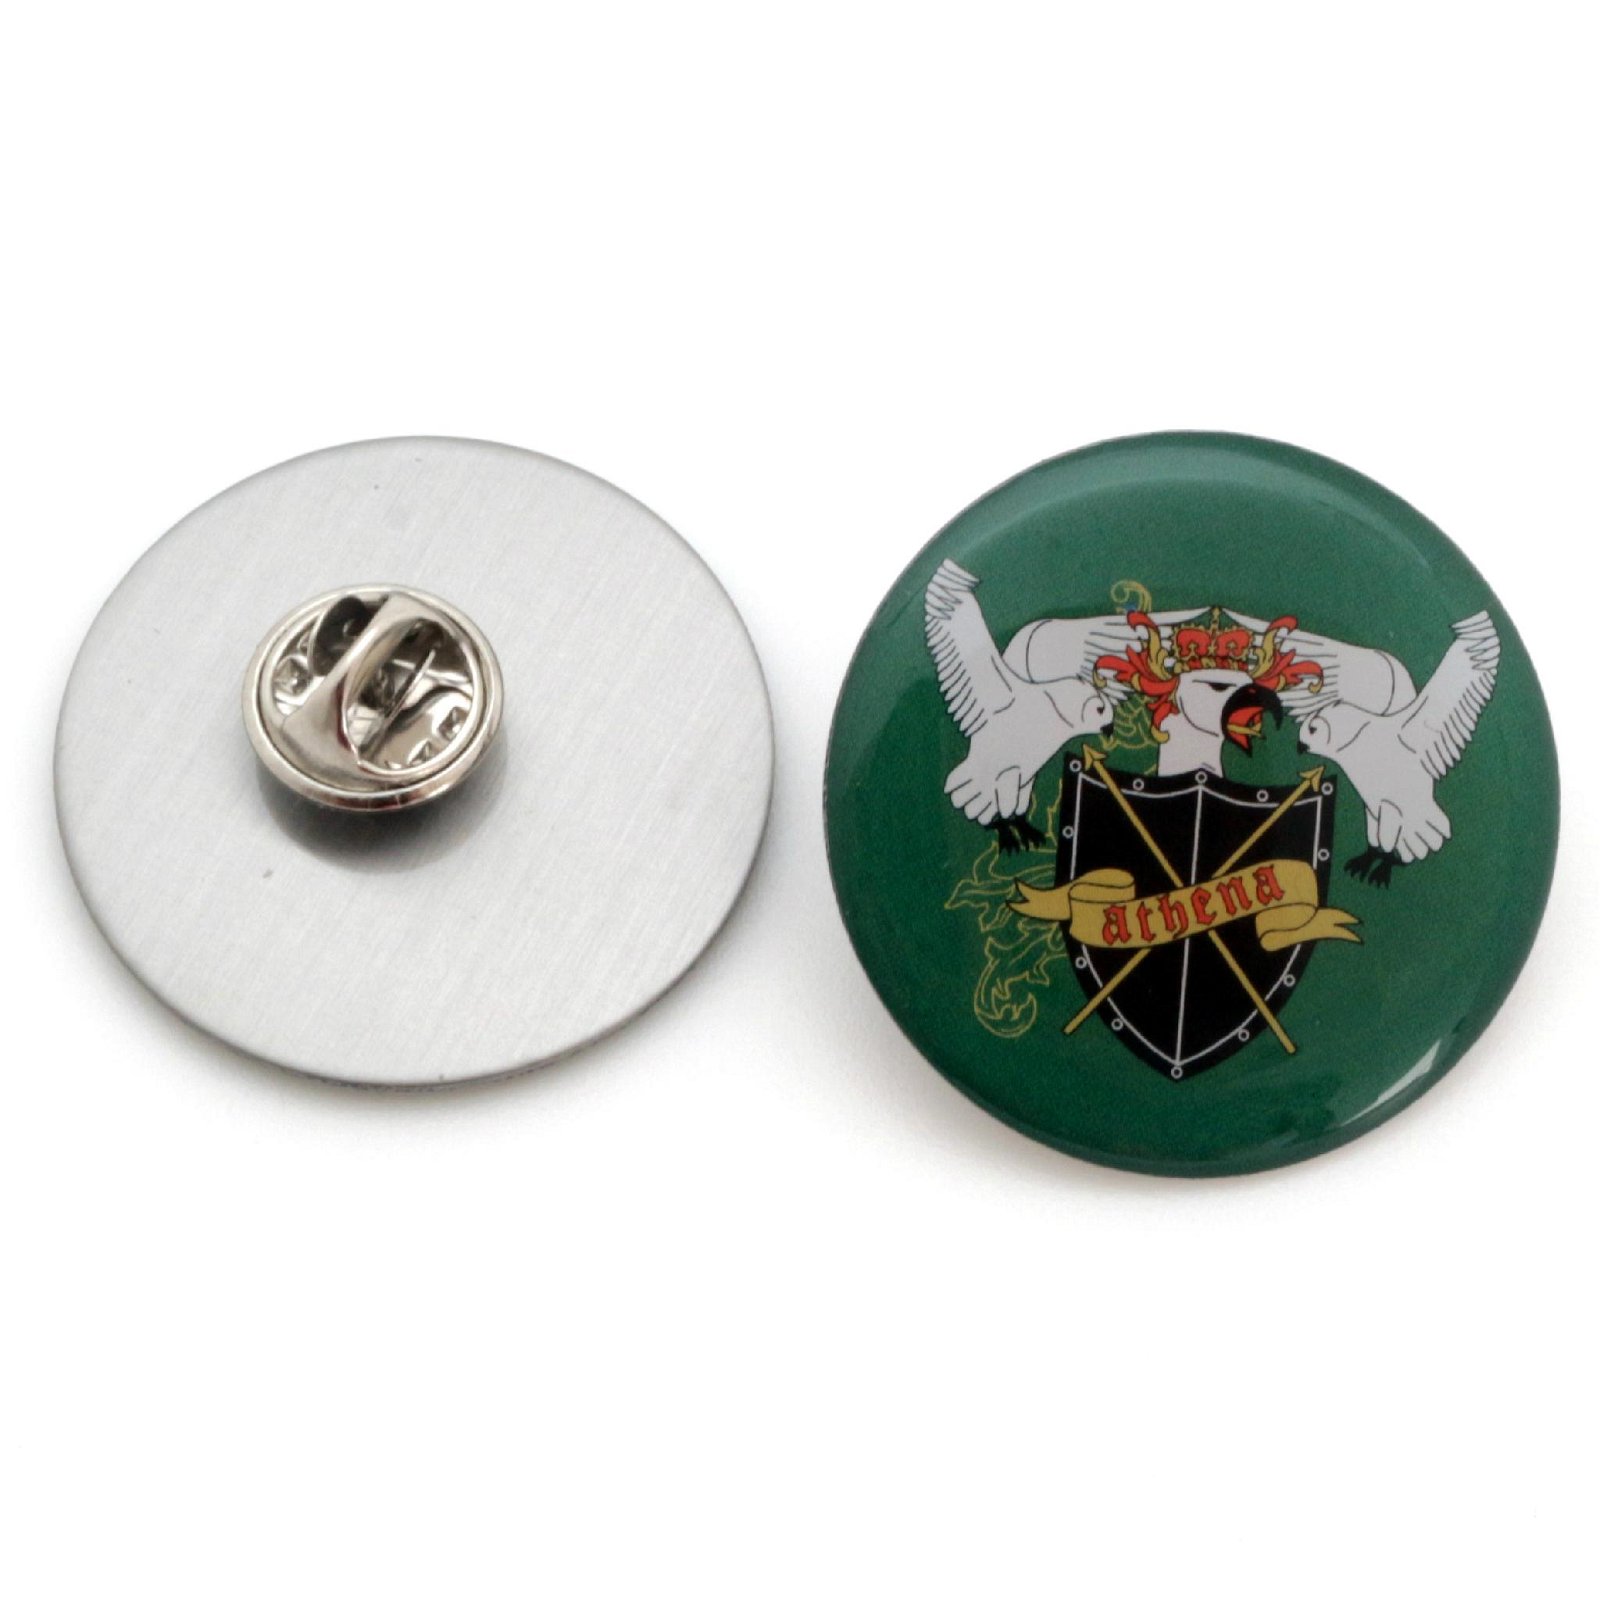 Wholesale metal lapel pin badge for souvenir 2